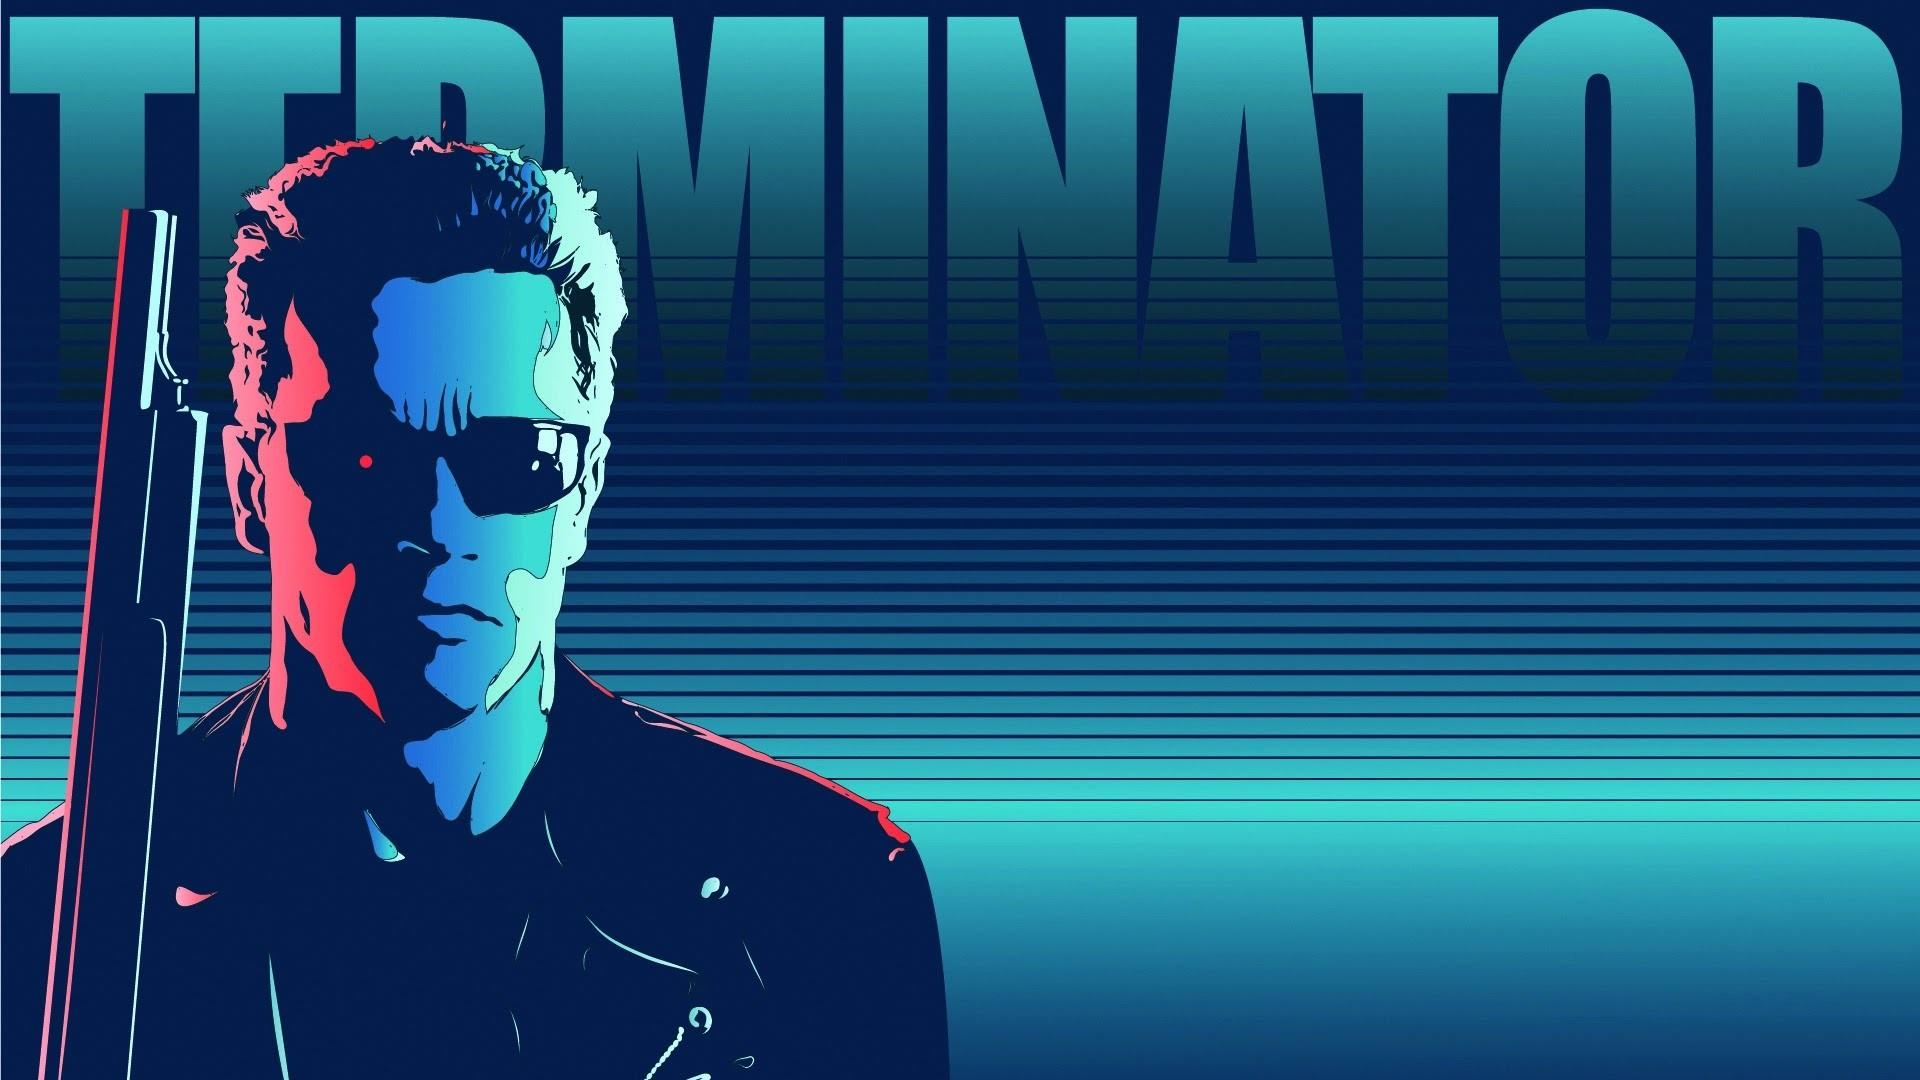 Terminator 2 Wallpaper background picture